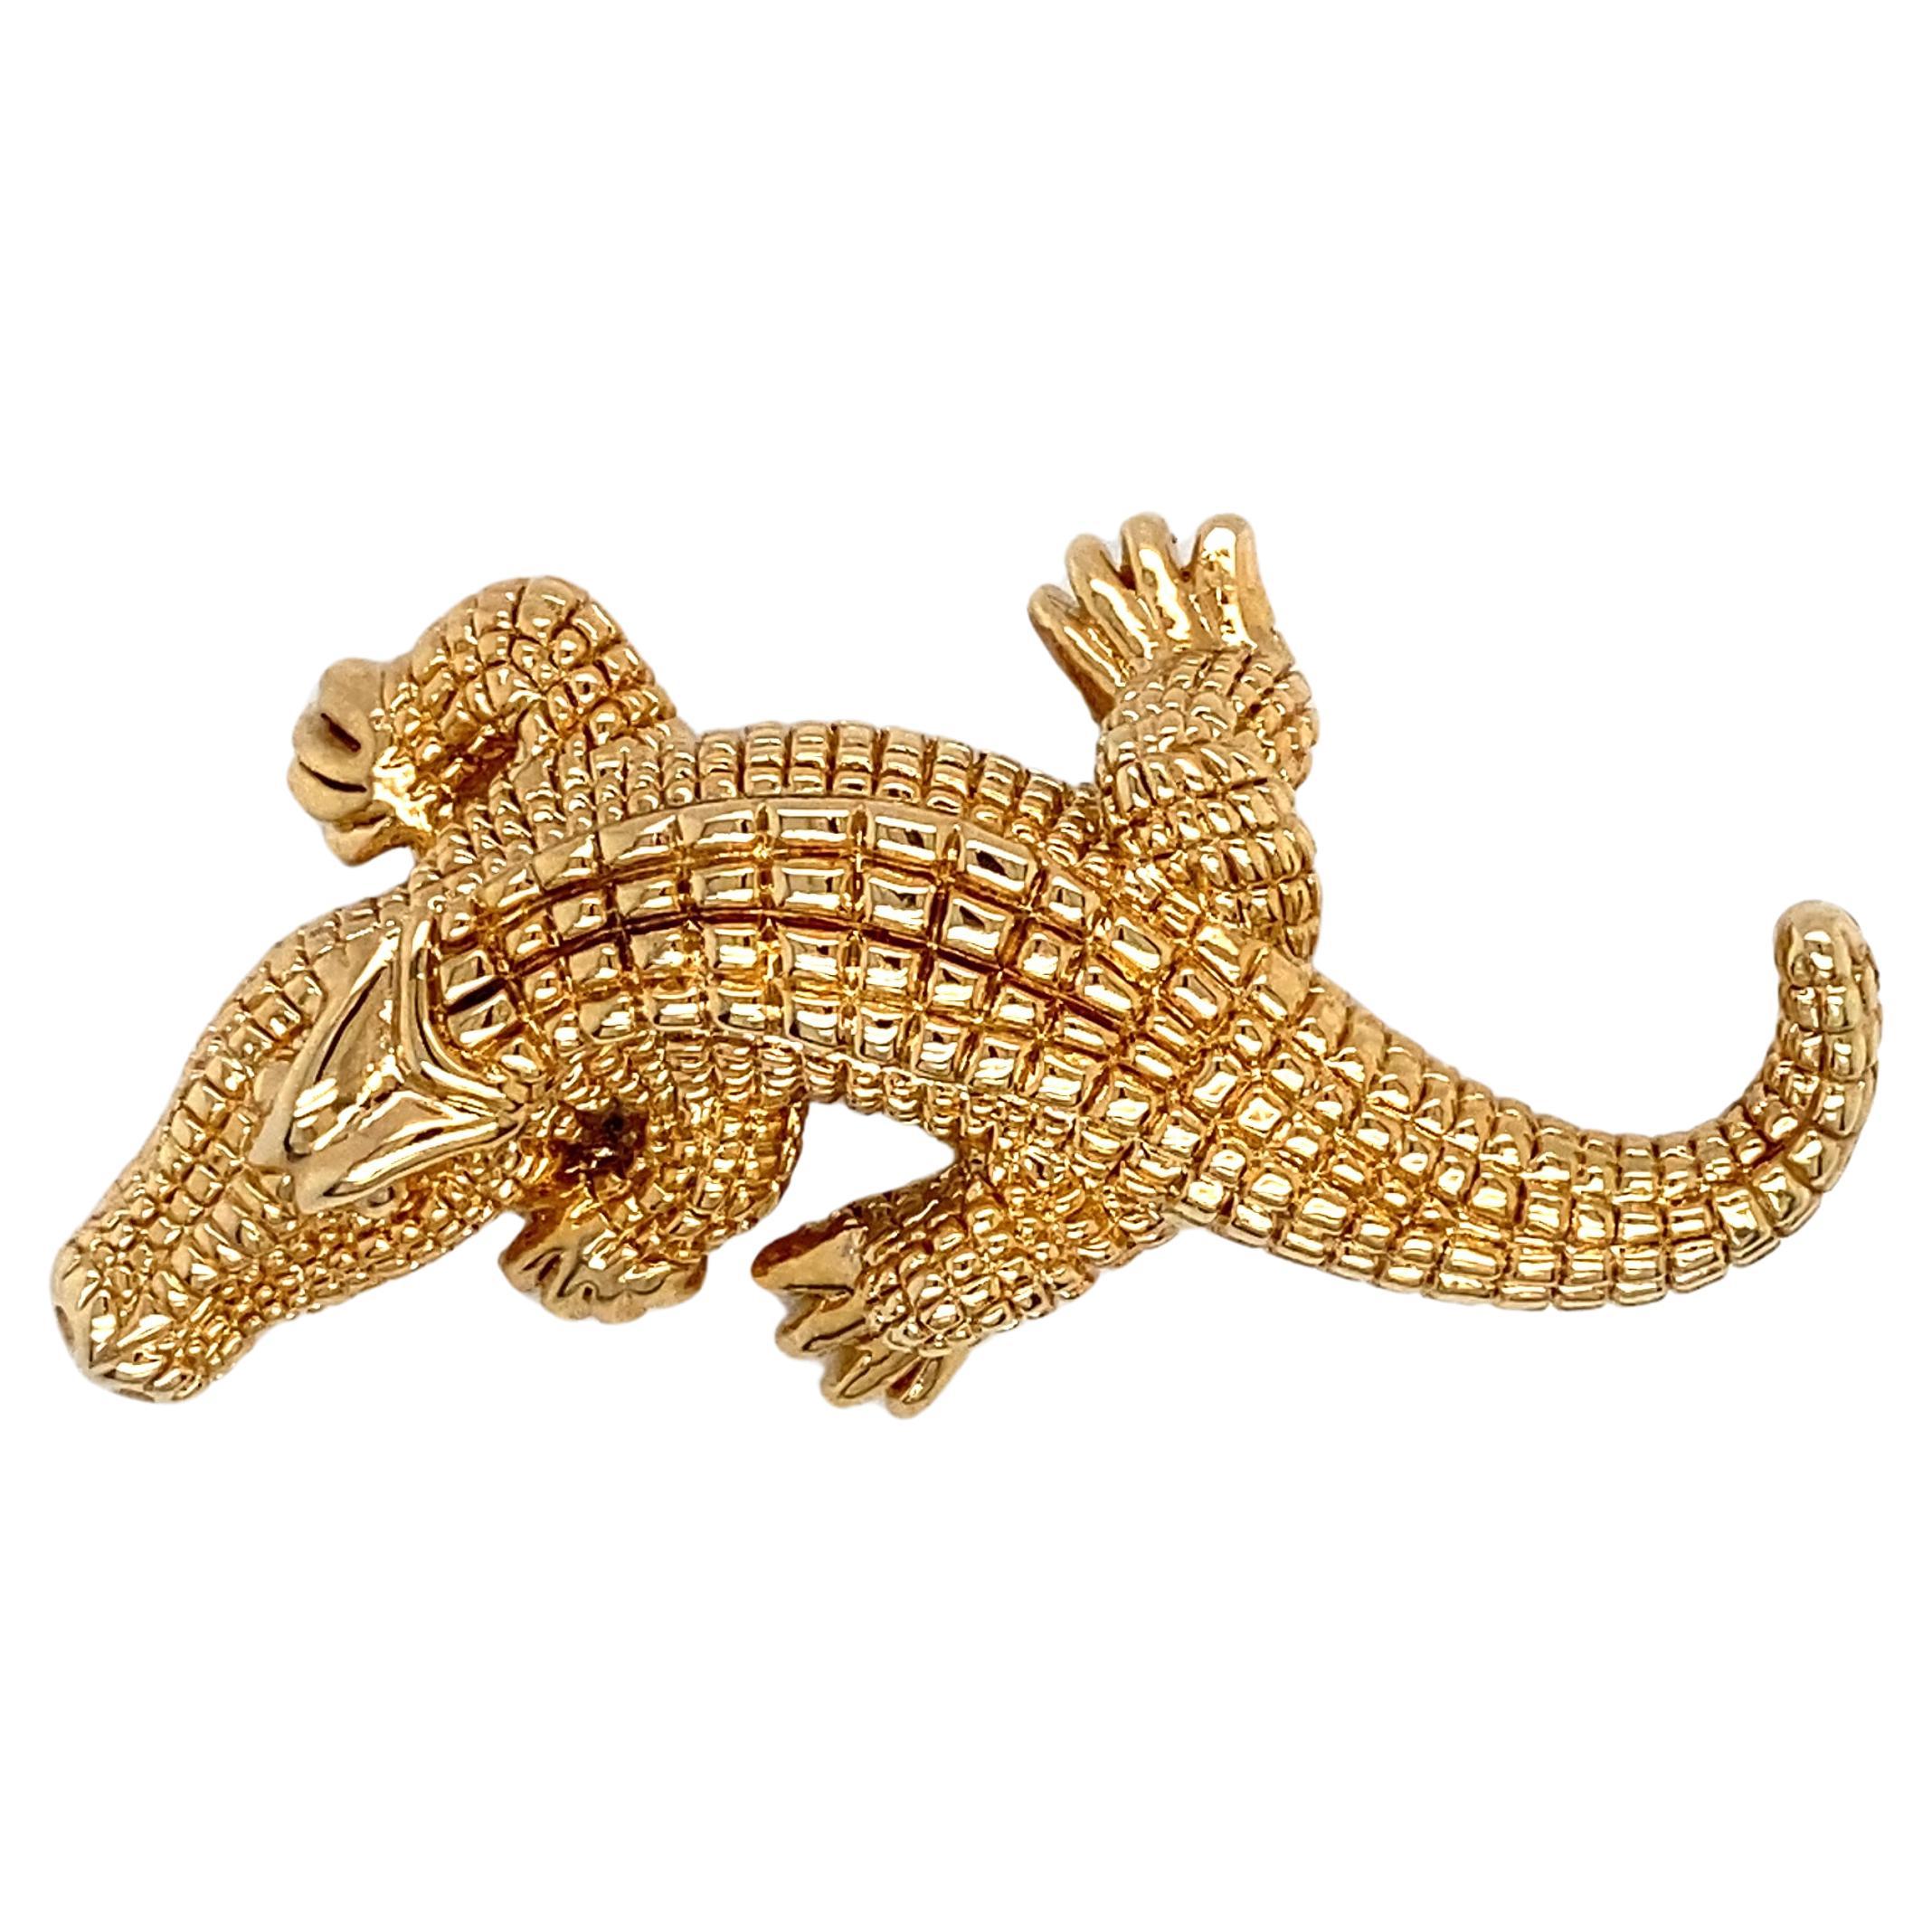 Circa 1960s Alligator Brooch in 14 Karat Gold For Sale